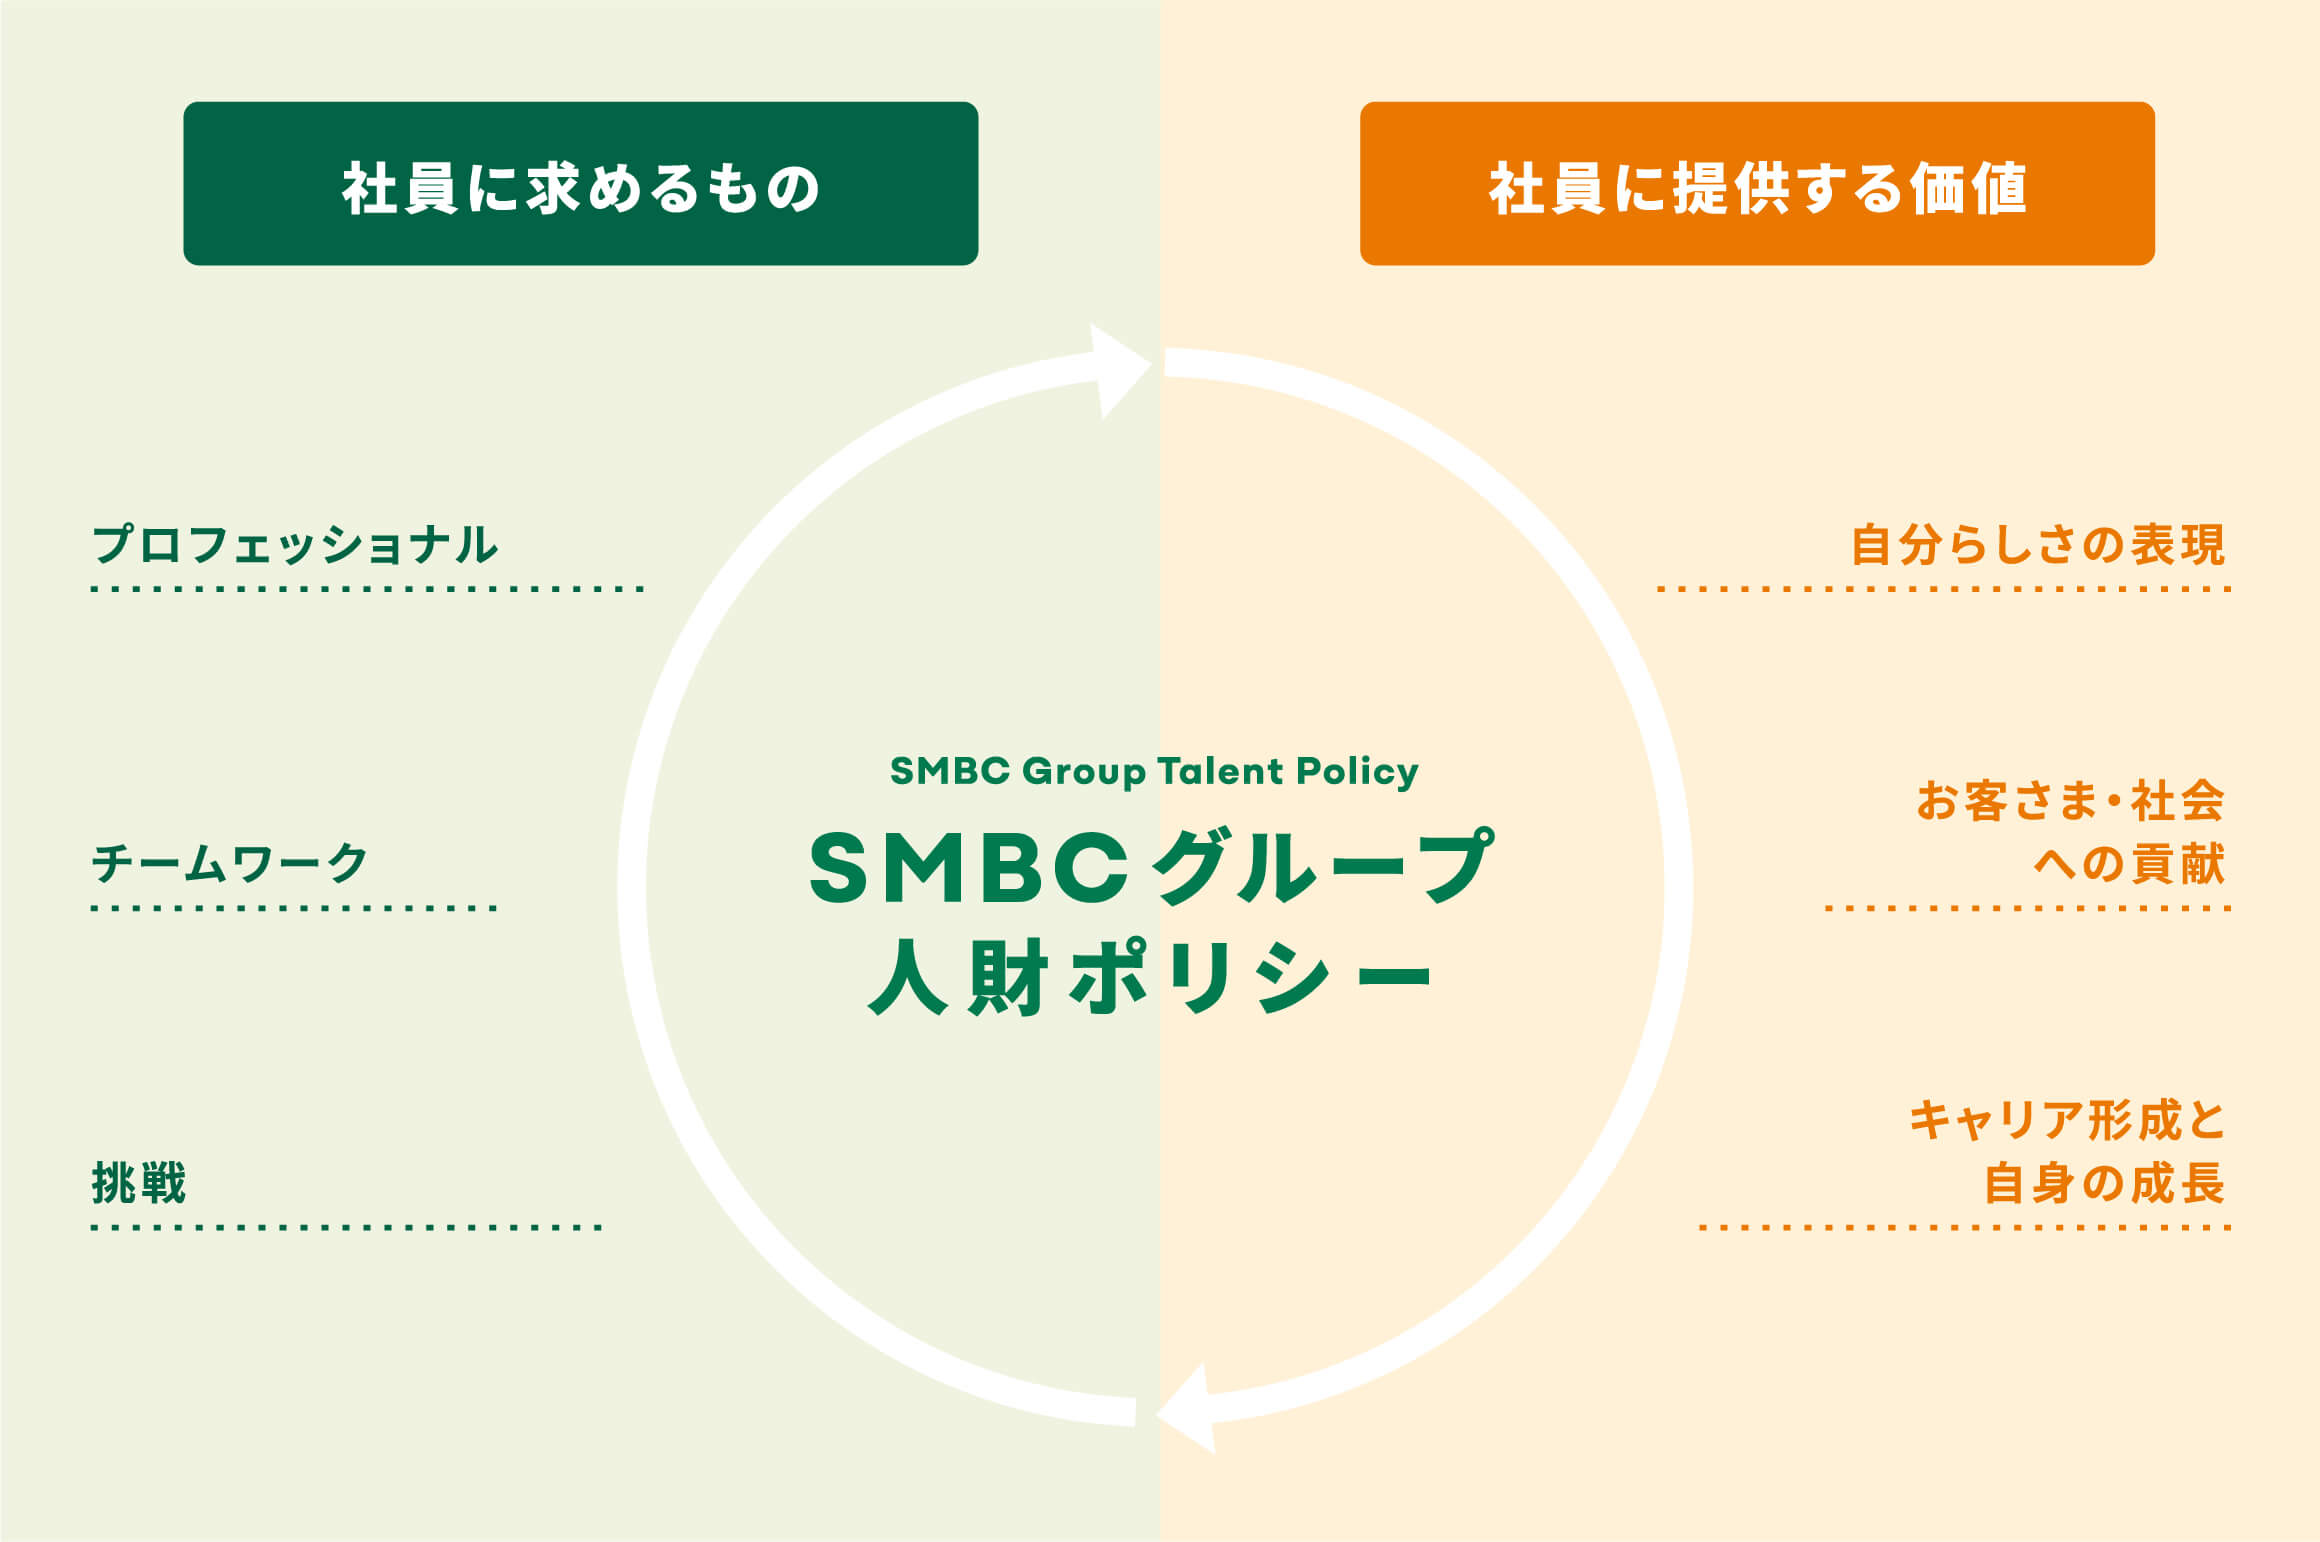 SMBC Group Talent Policy SMBCグループ人財ポリシー